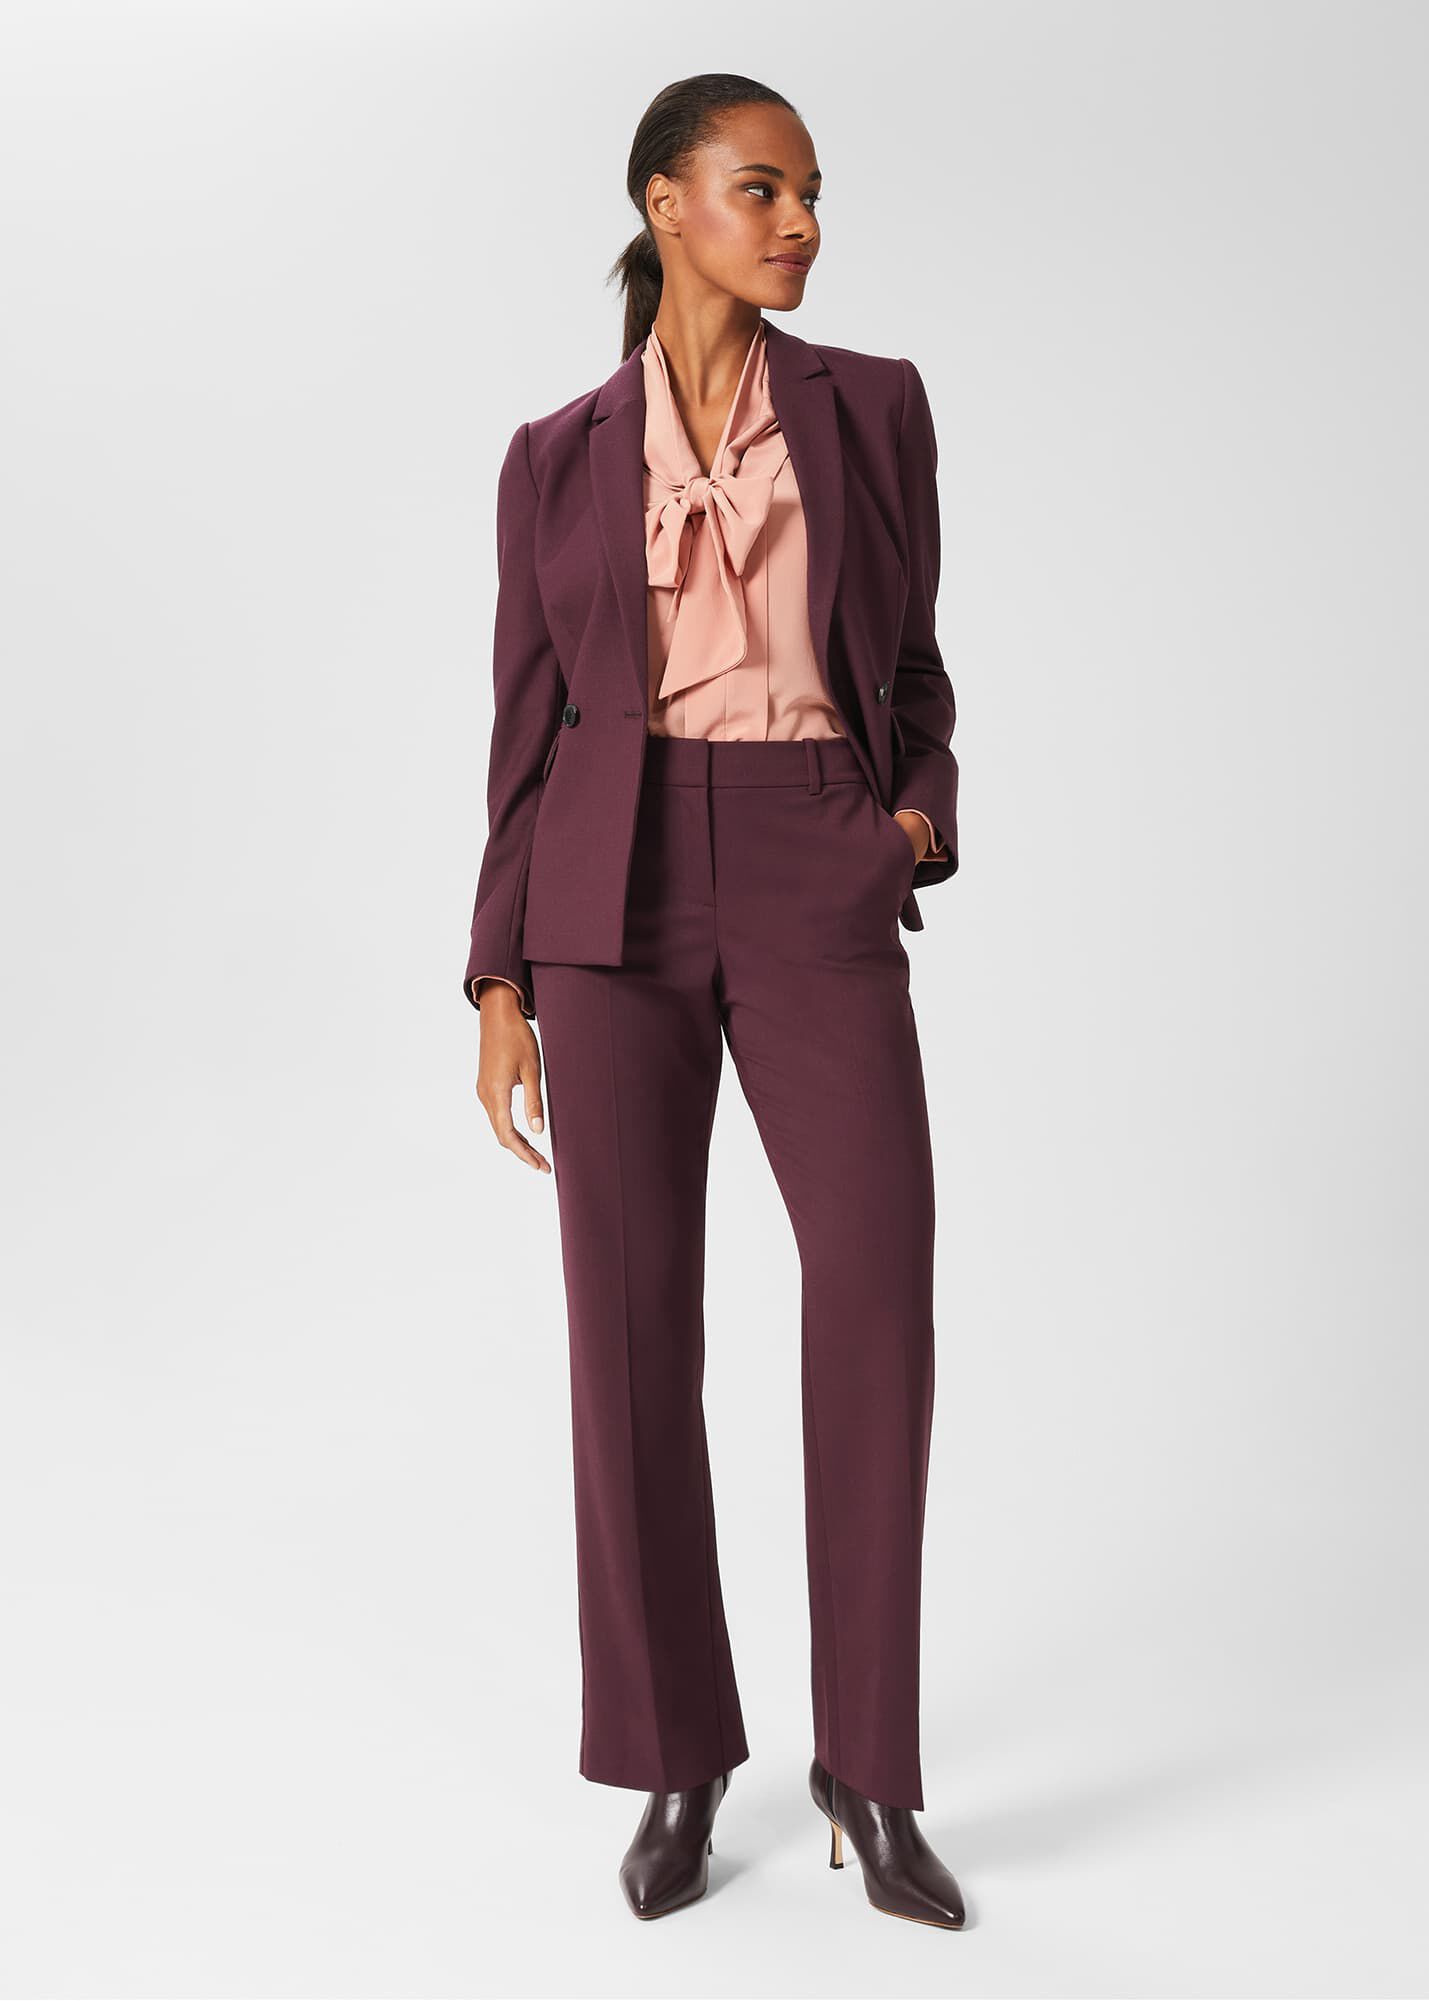 Burgundy Formal Pantsuit for Office Women, Slim Fit Blazer Trouser Suit for  Women, Business Women Suit With Buttoned Blazer - Etsy